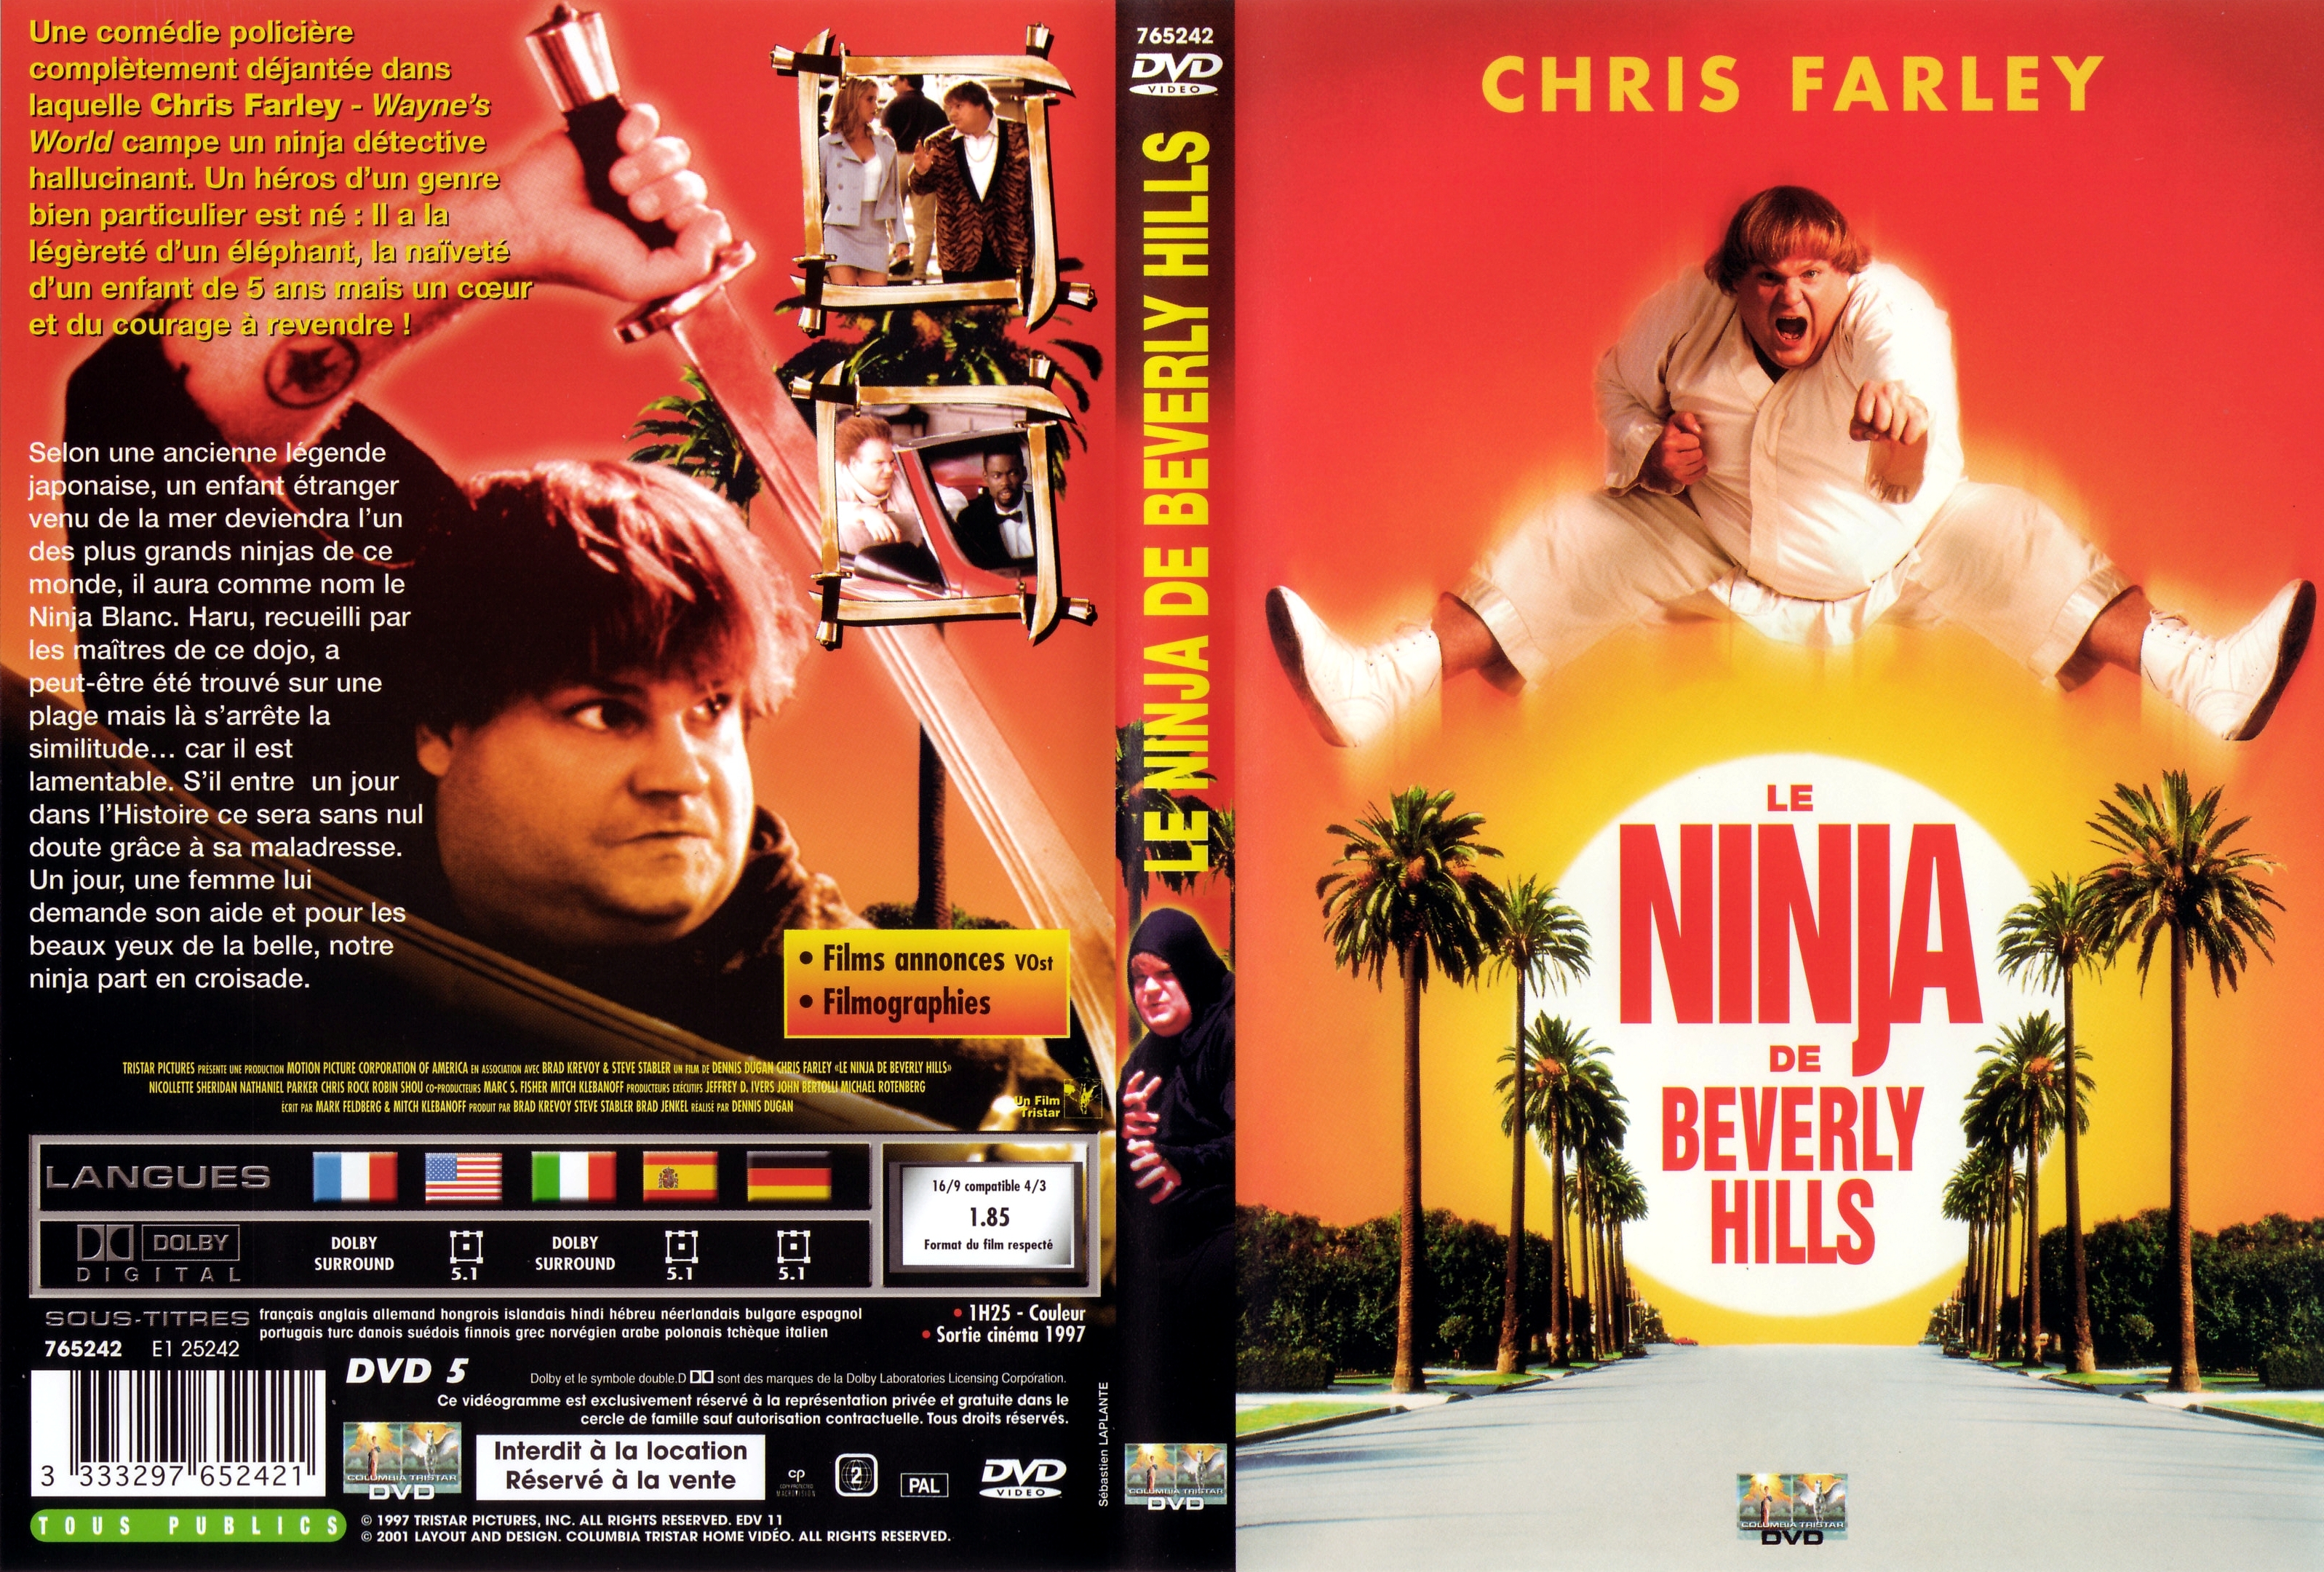 Jaquette DVD Le ninja de Beverly Hills